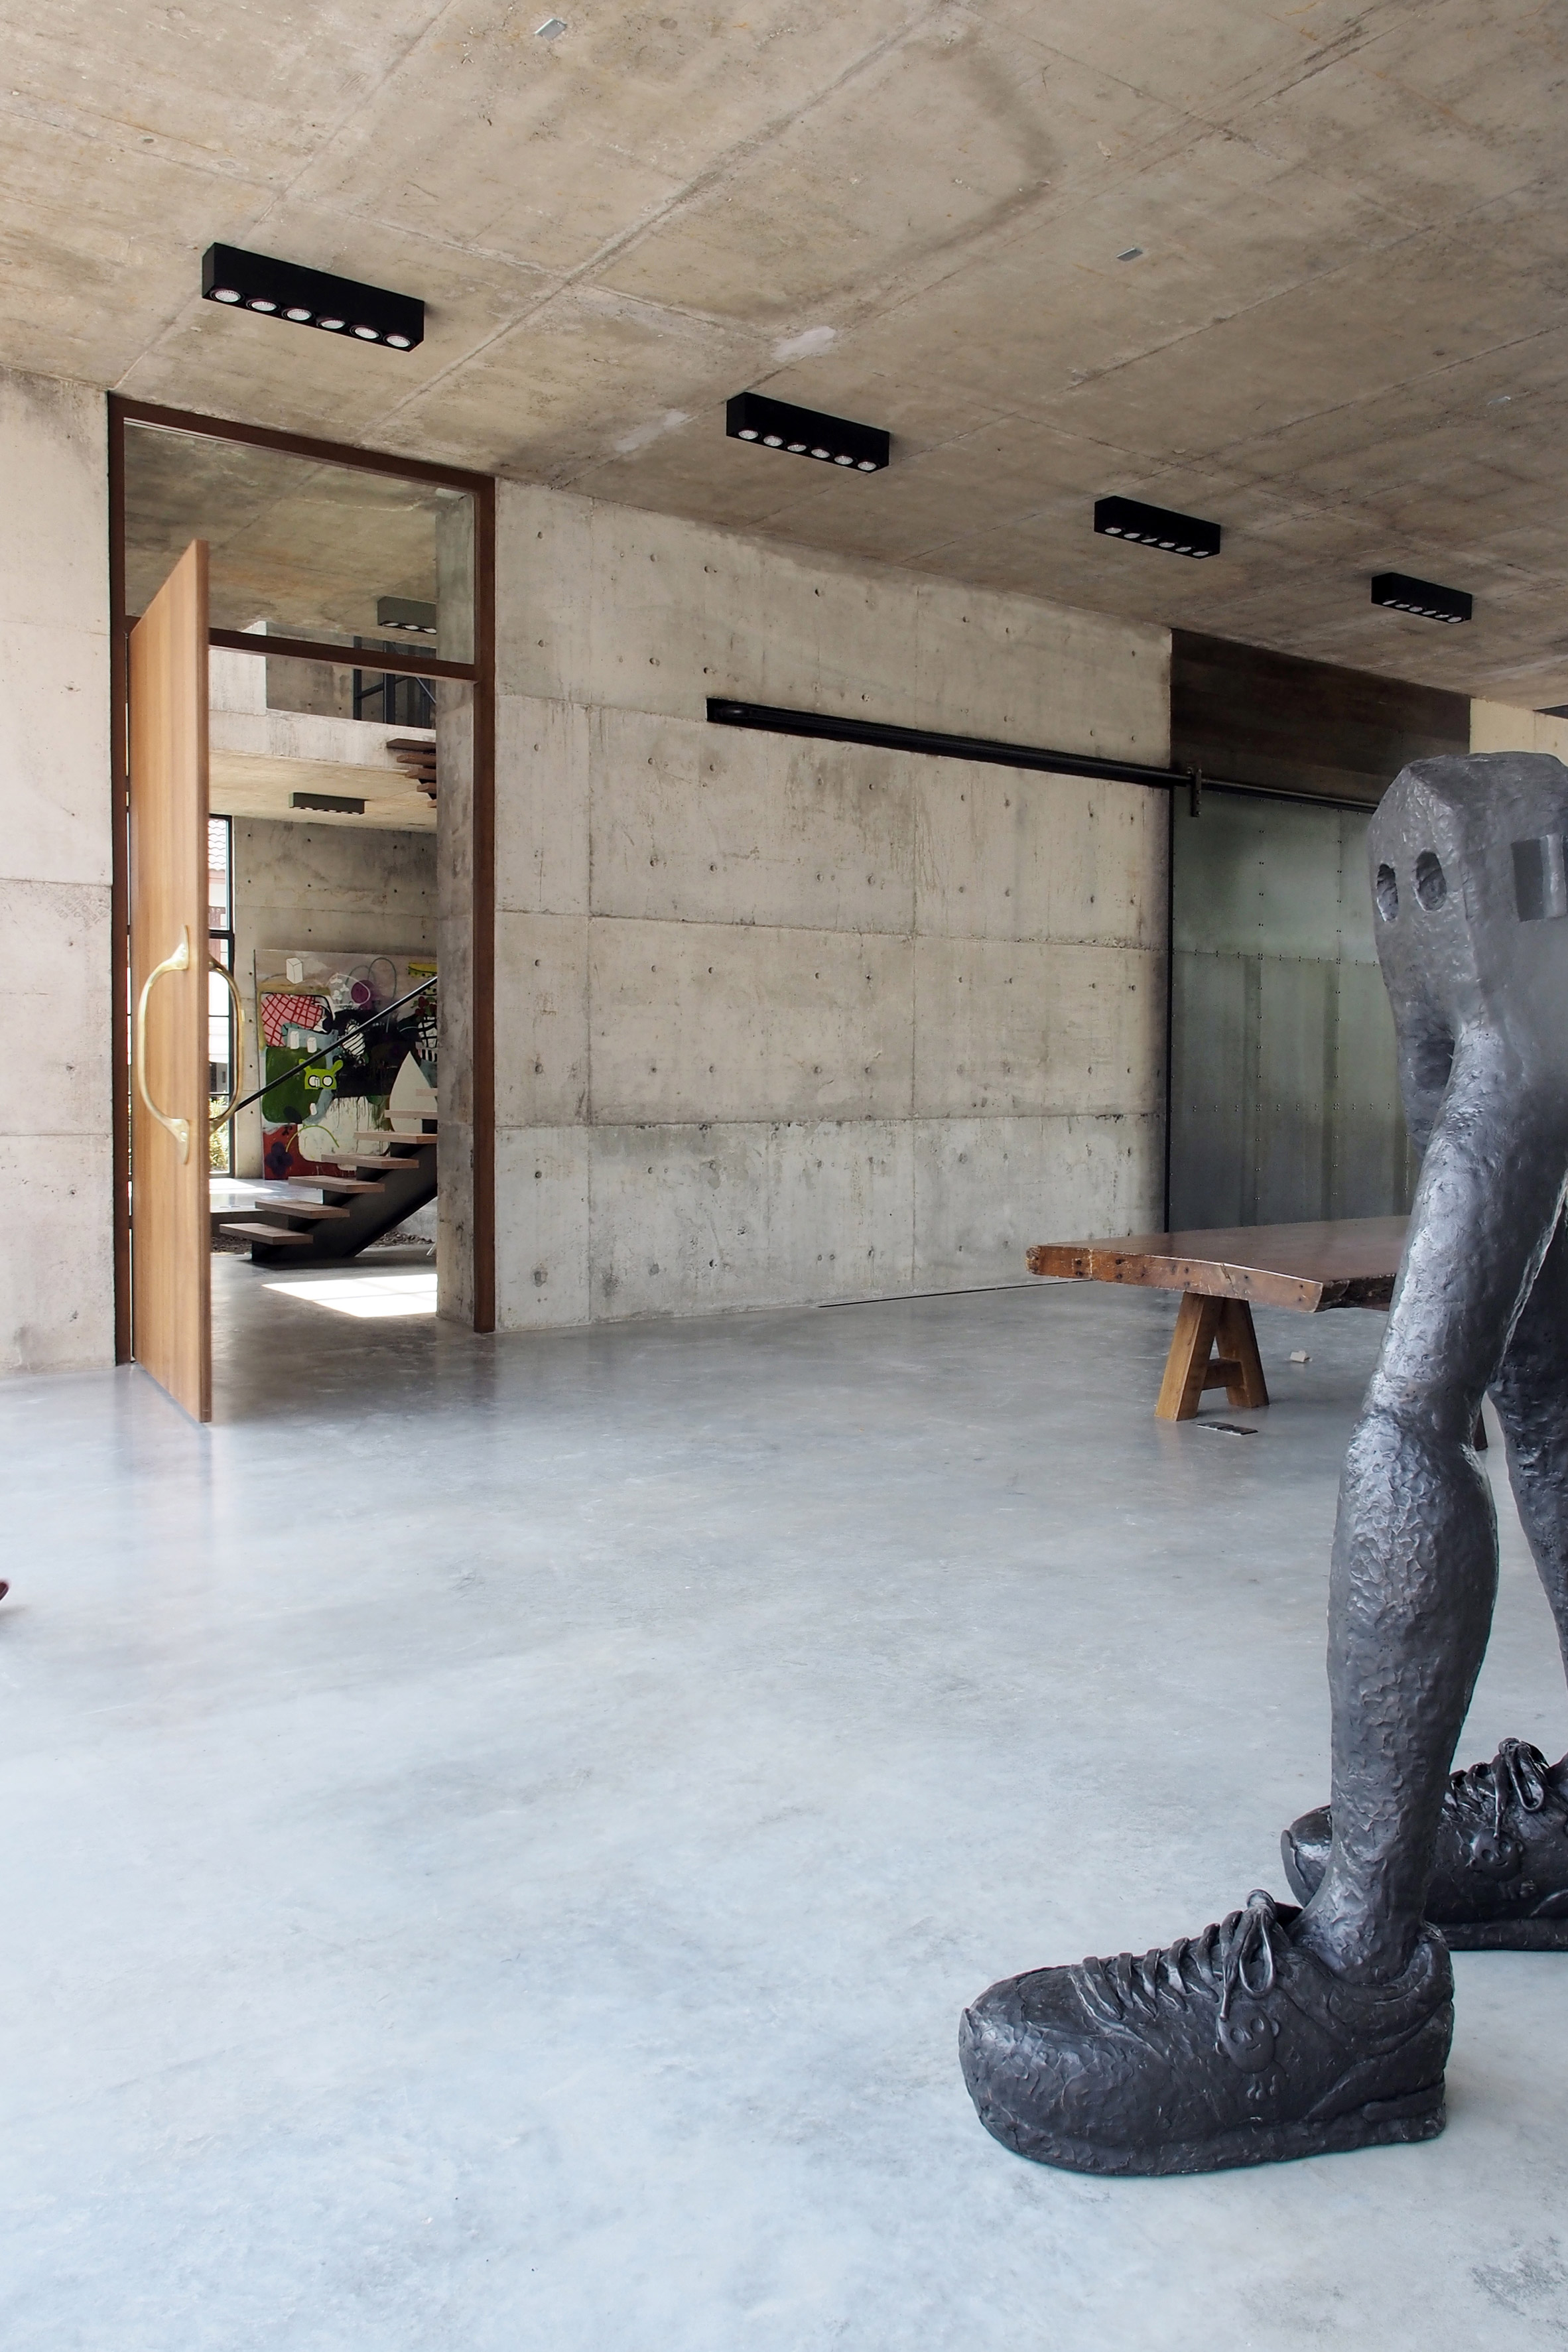 solid-concrete-gallery-as-living-artwork-aswa-architecture-bangkok-thailand_dezeen_2364_col_16